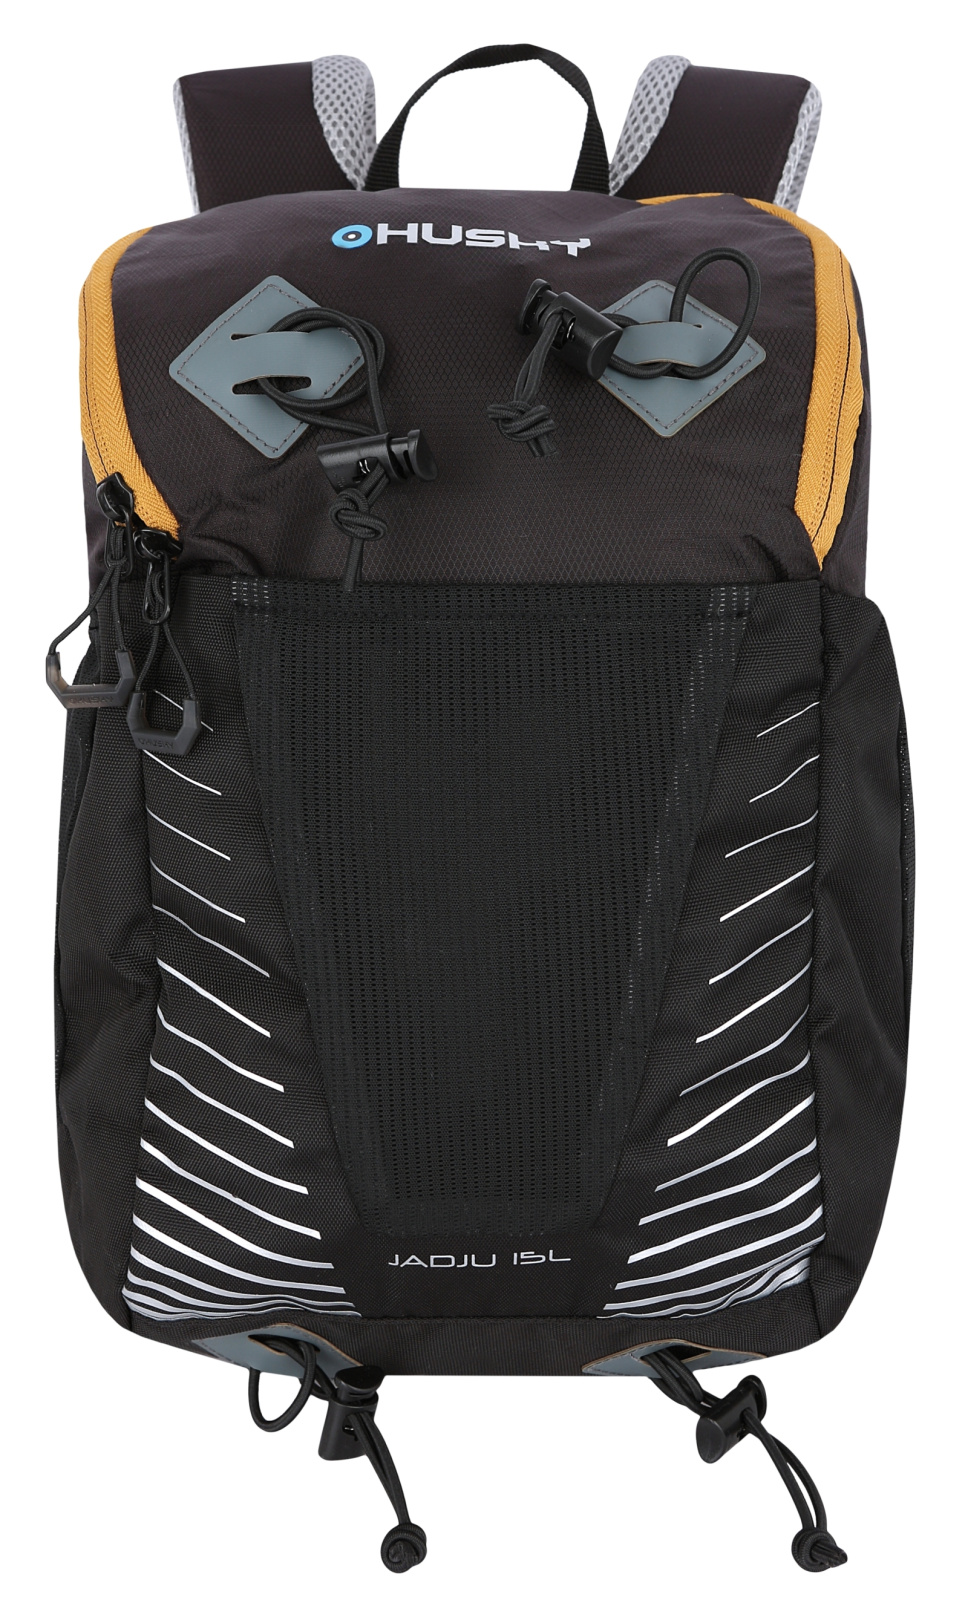 Children's backpack HUSKY Jadju 10l black